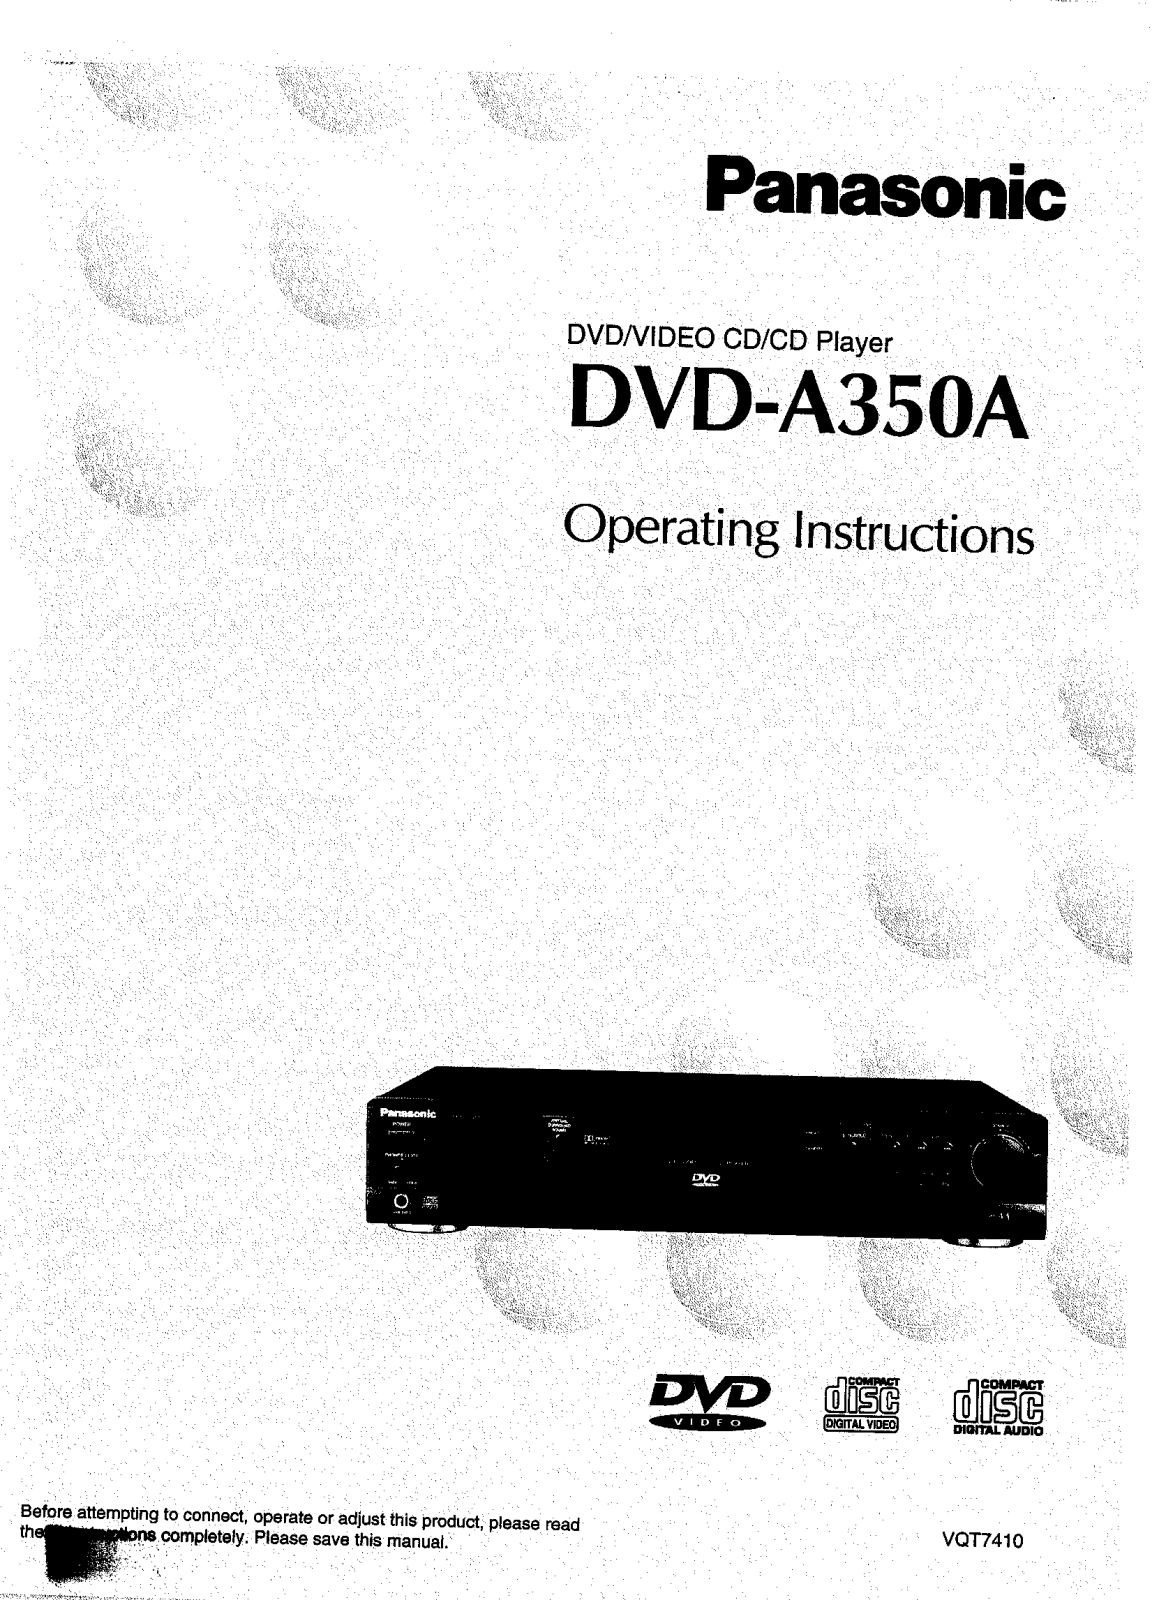 Panasonic DVD-A350A User Manual